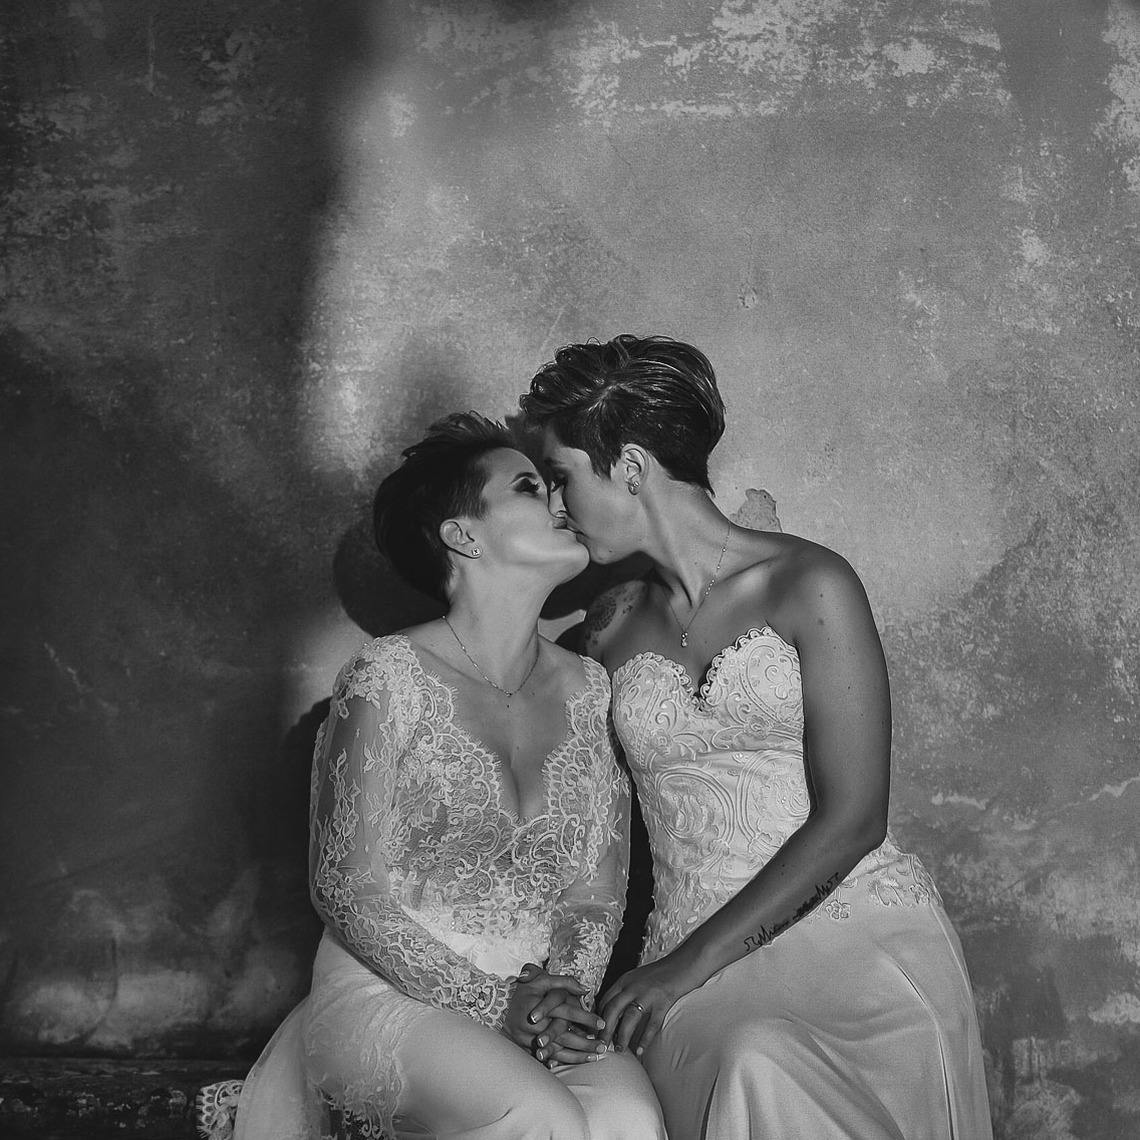 samesex, mogliemoglie, samesex, matrimonio due donne, Il Rinuccino, Fiesole, Firenze, Toscana, Fotografo, Fotografie